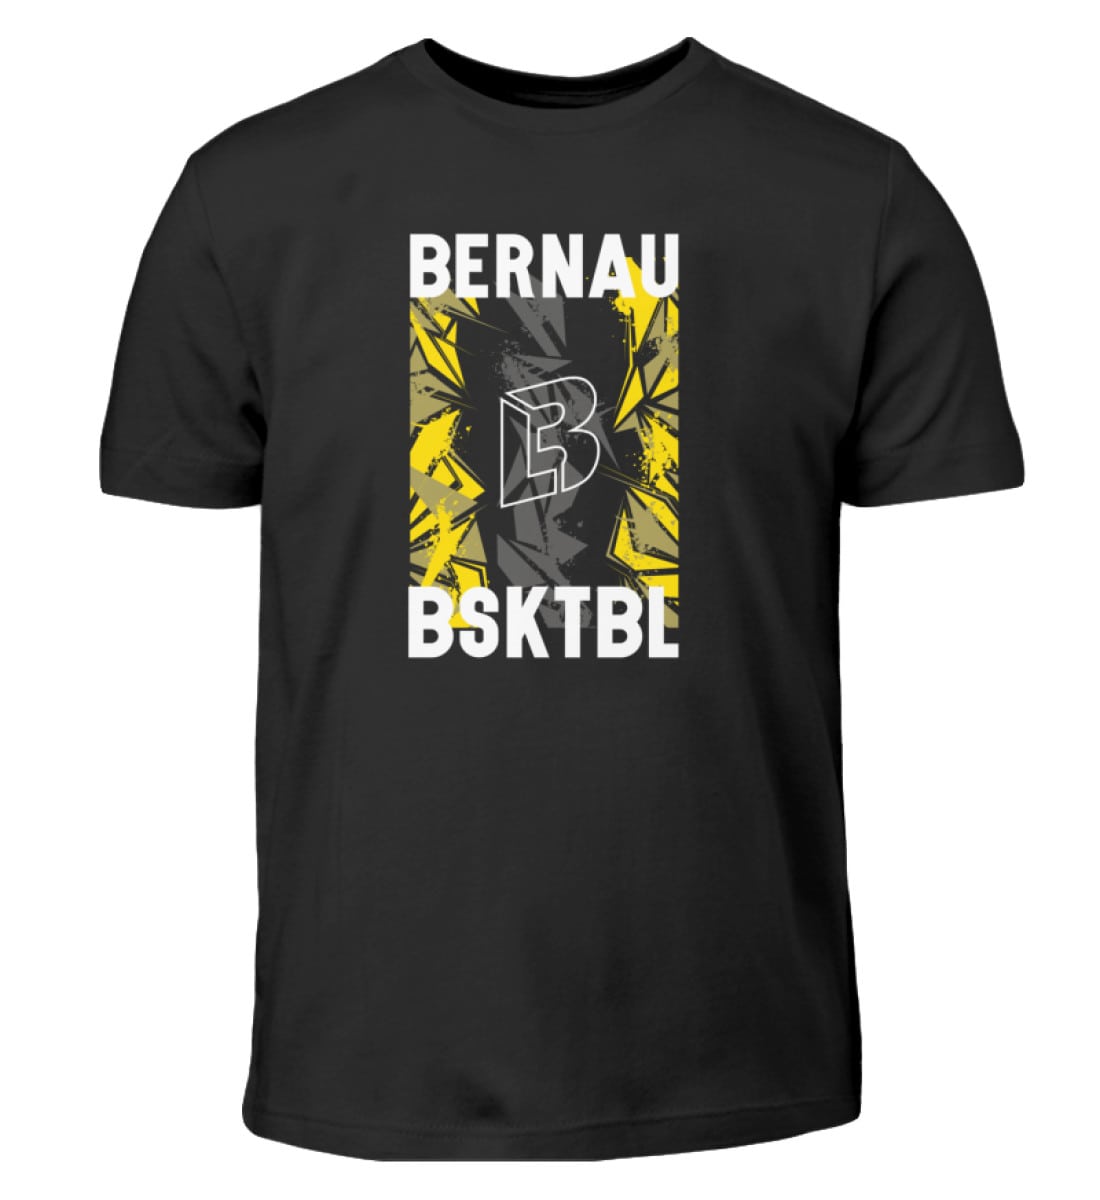 Bernau Bsktbl - Kinder T-Shirt-16